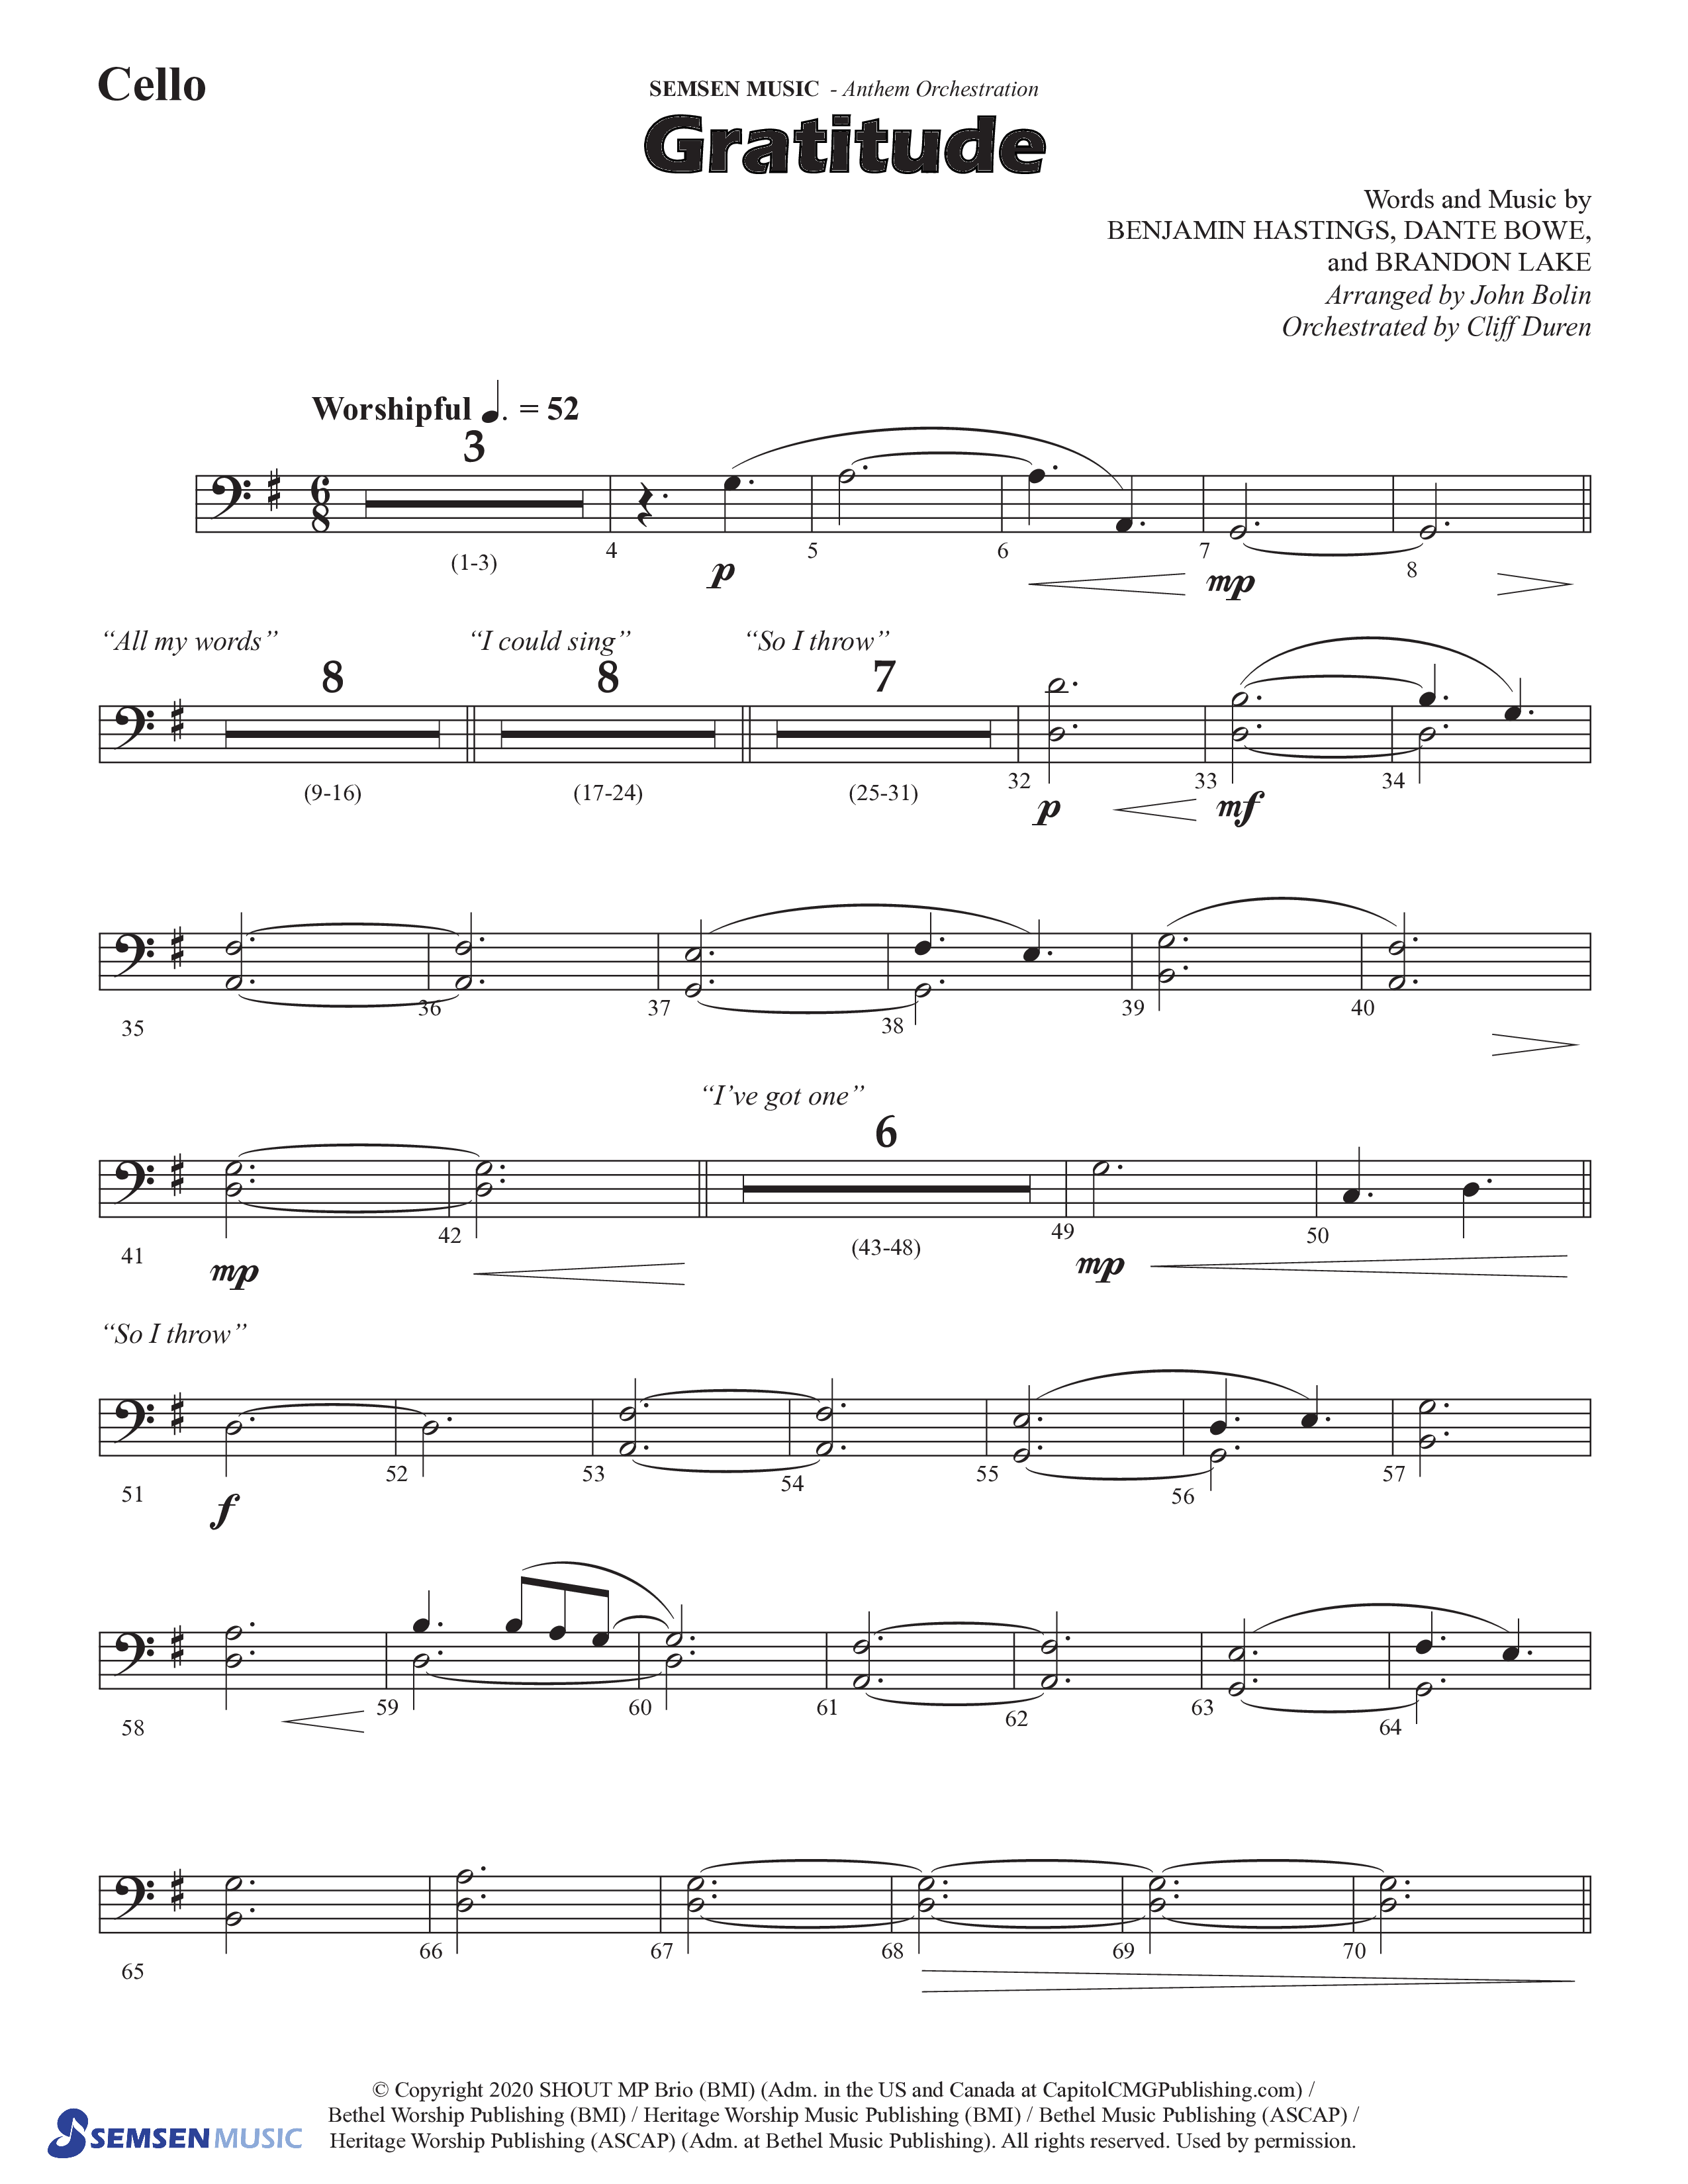 Gratitude (Choral Anthem SATB) Cello (Semsen Music / Arr. John Bolin / Orch. Cliff Duren)